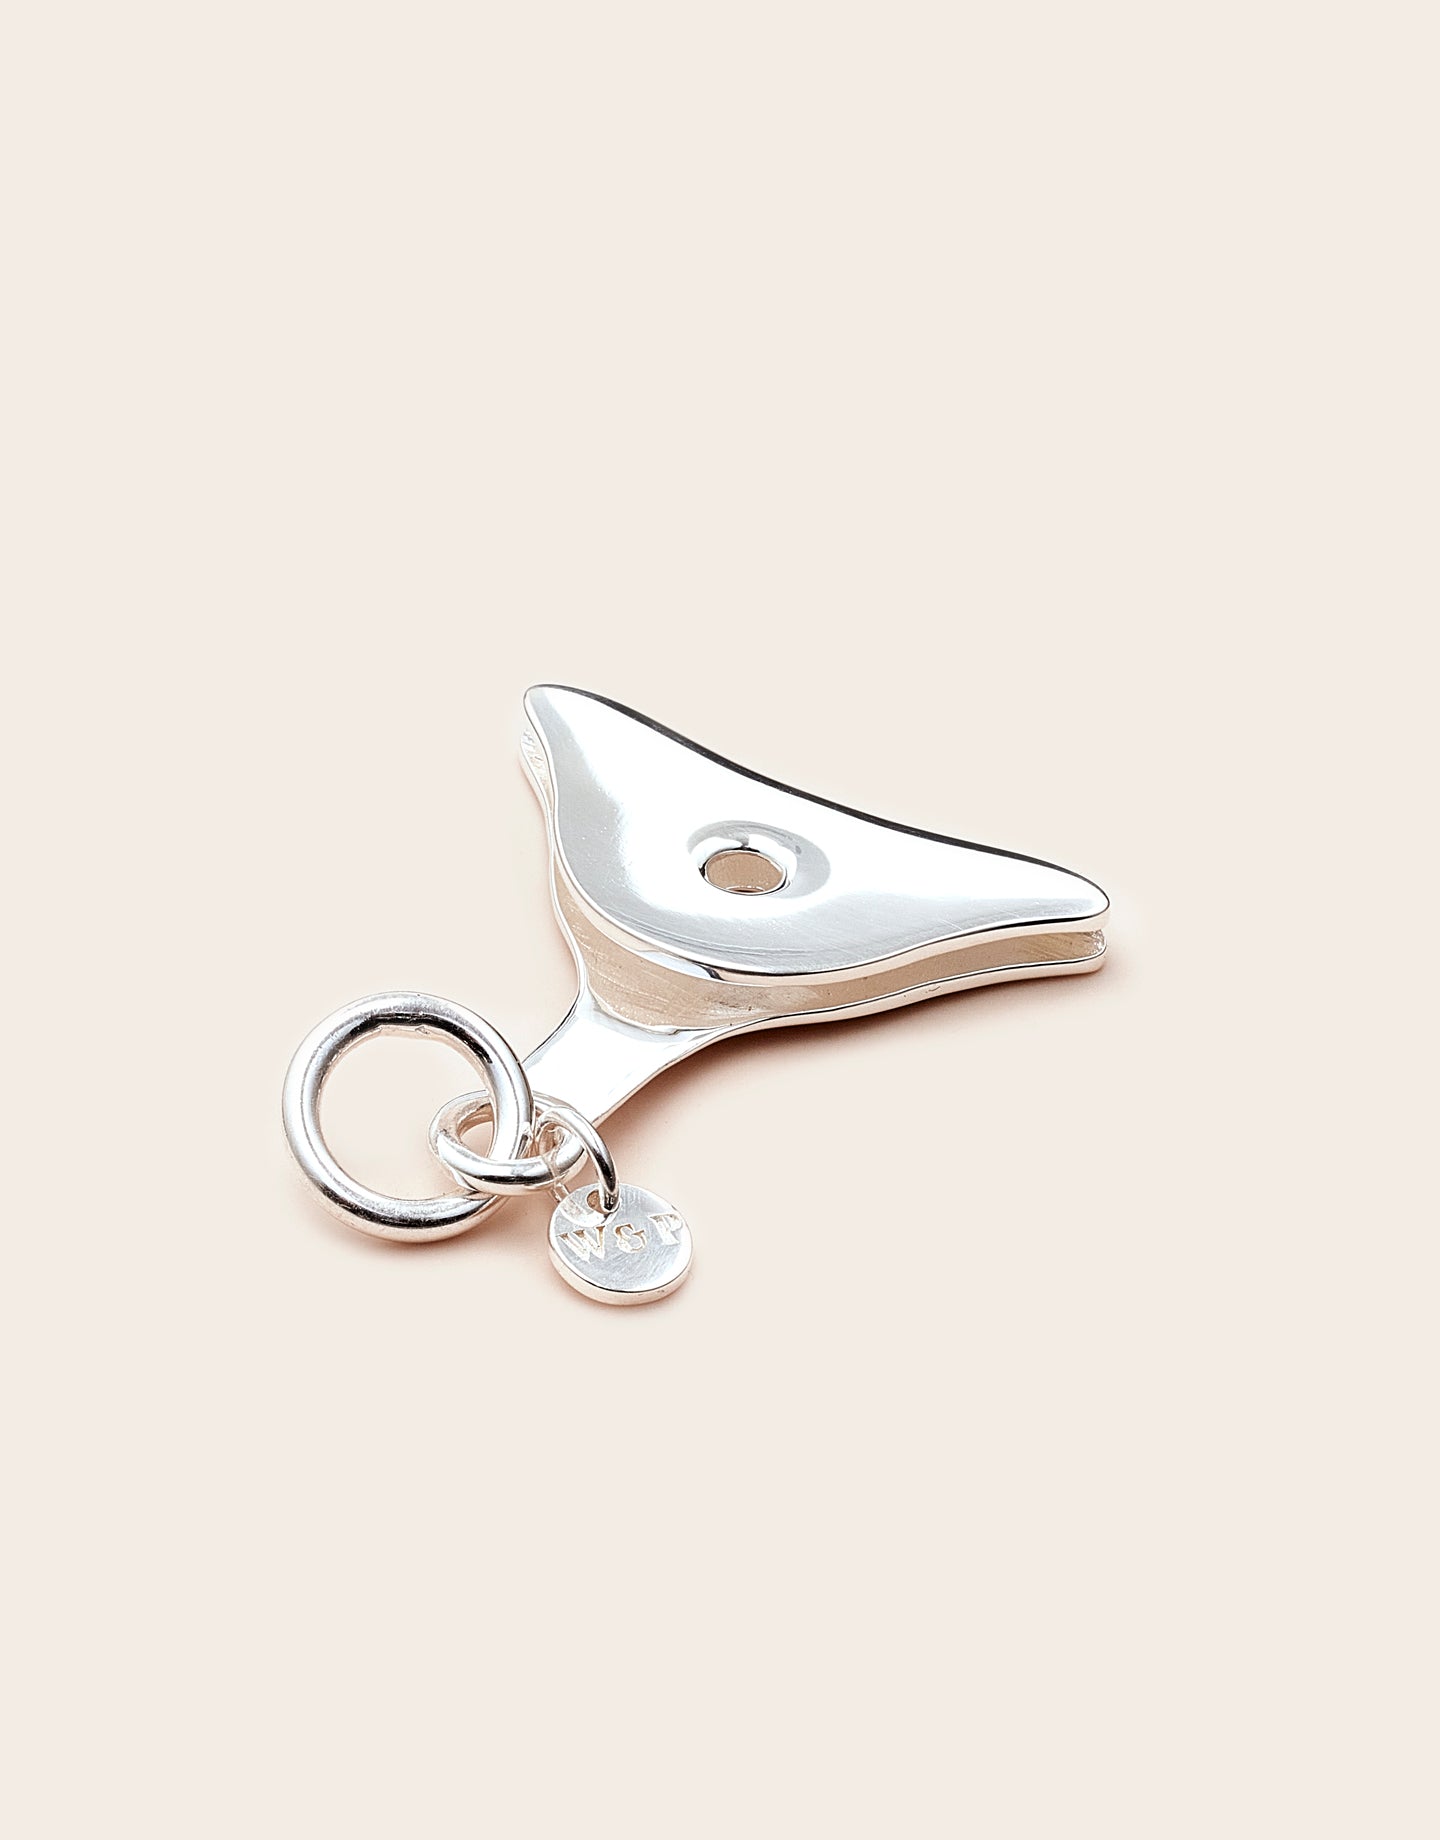 “New” Whistle Design